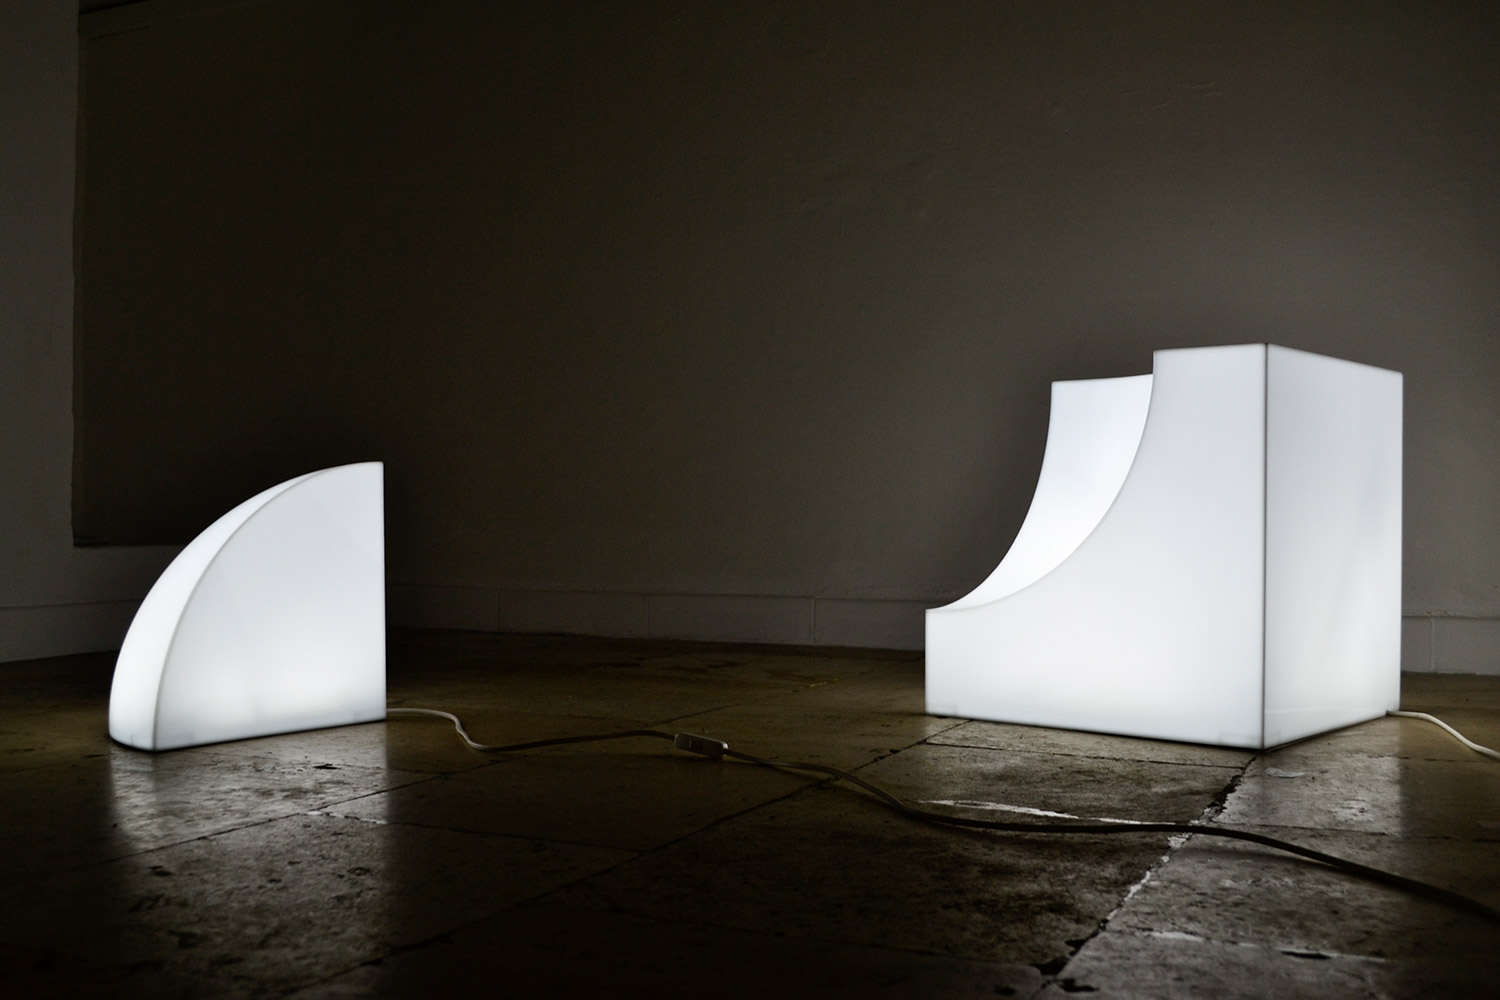 Antonio Trotta, Lampada sferica, 1972-2016, plexiglass, light, two elements 40x40x40 cm